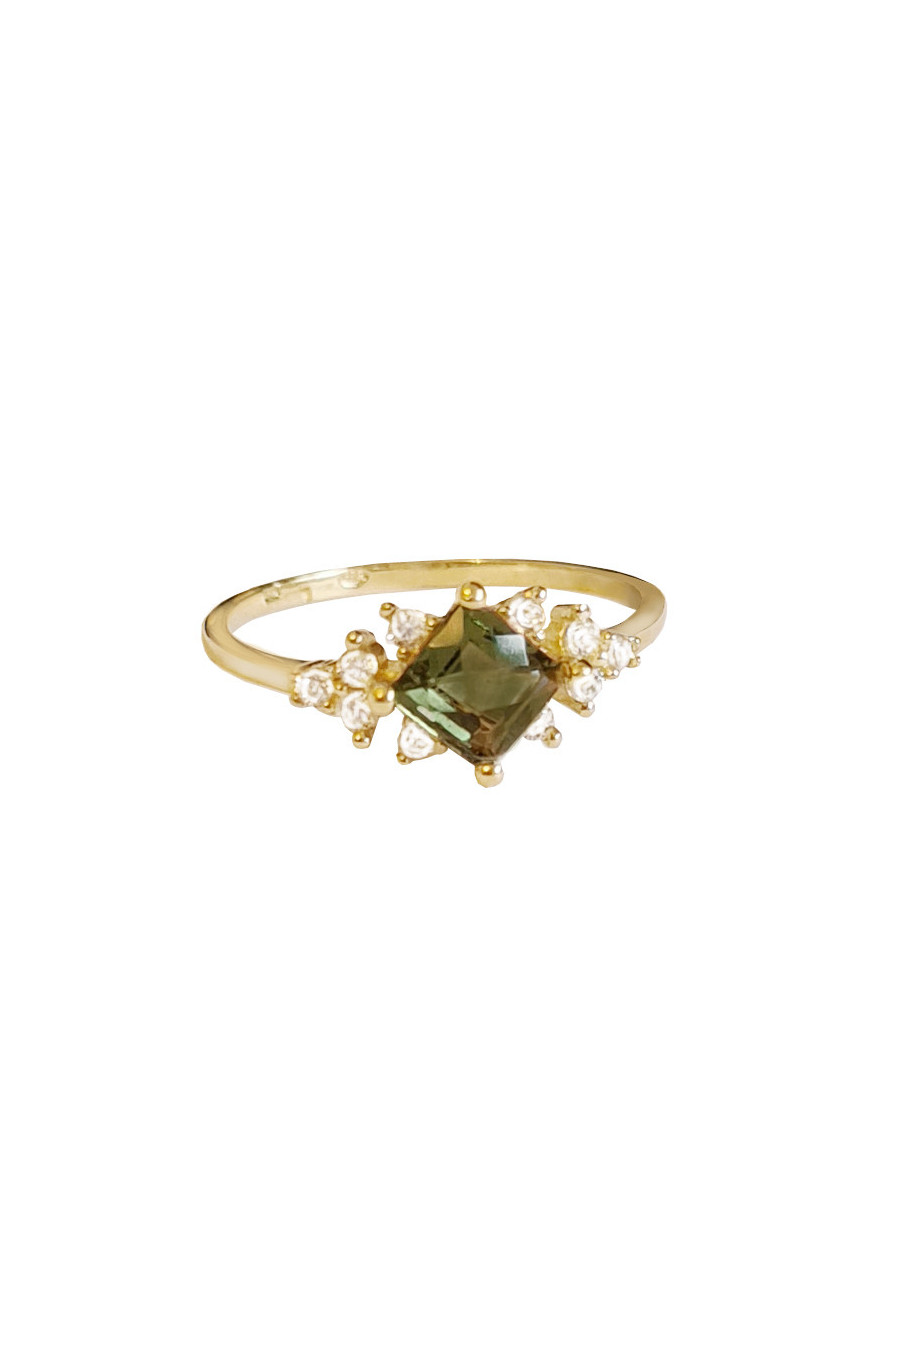 Gold ring, moldavite,zircon